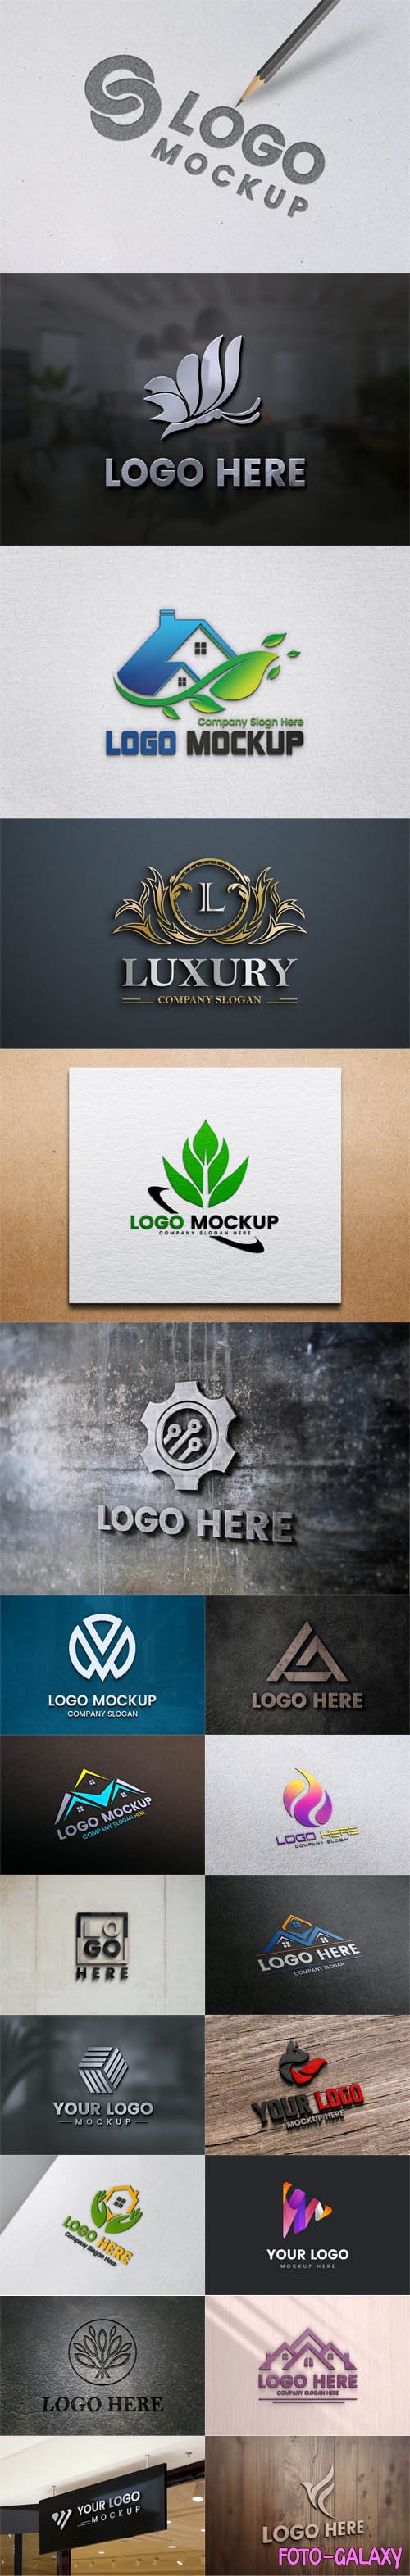 20 Photorealistic 3D Logo - PSD Mockup Templates